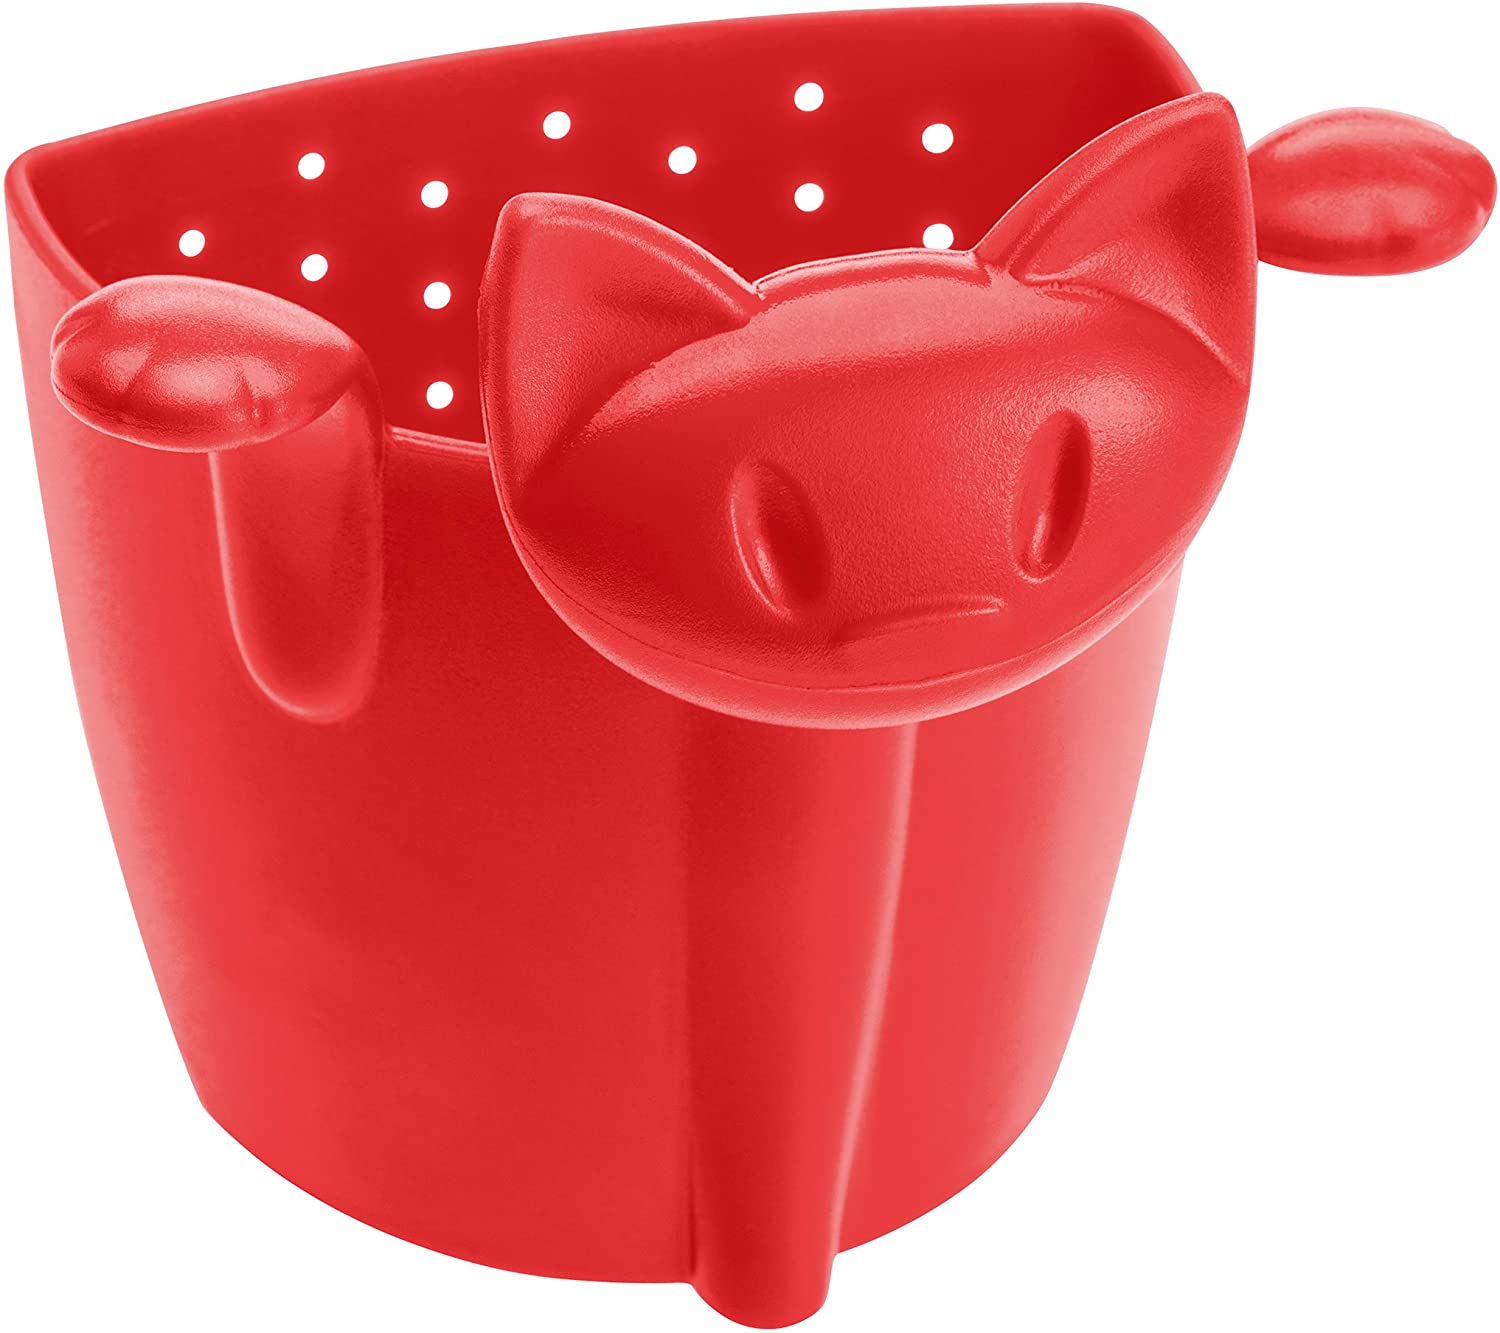 Koziol Cup Tea Strainer Mimmi Cat, Red, Plastic